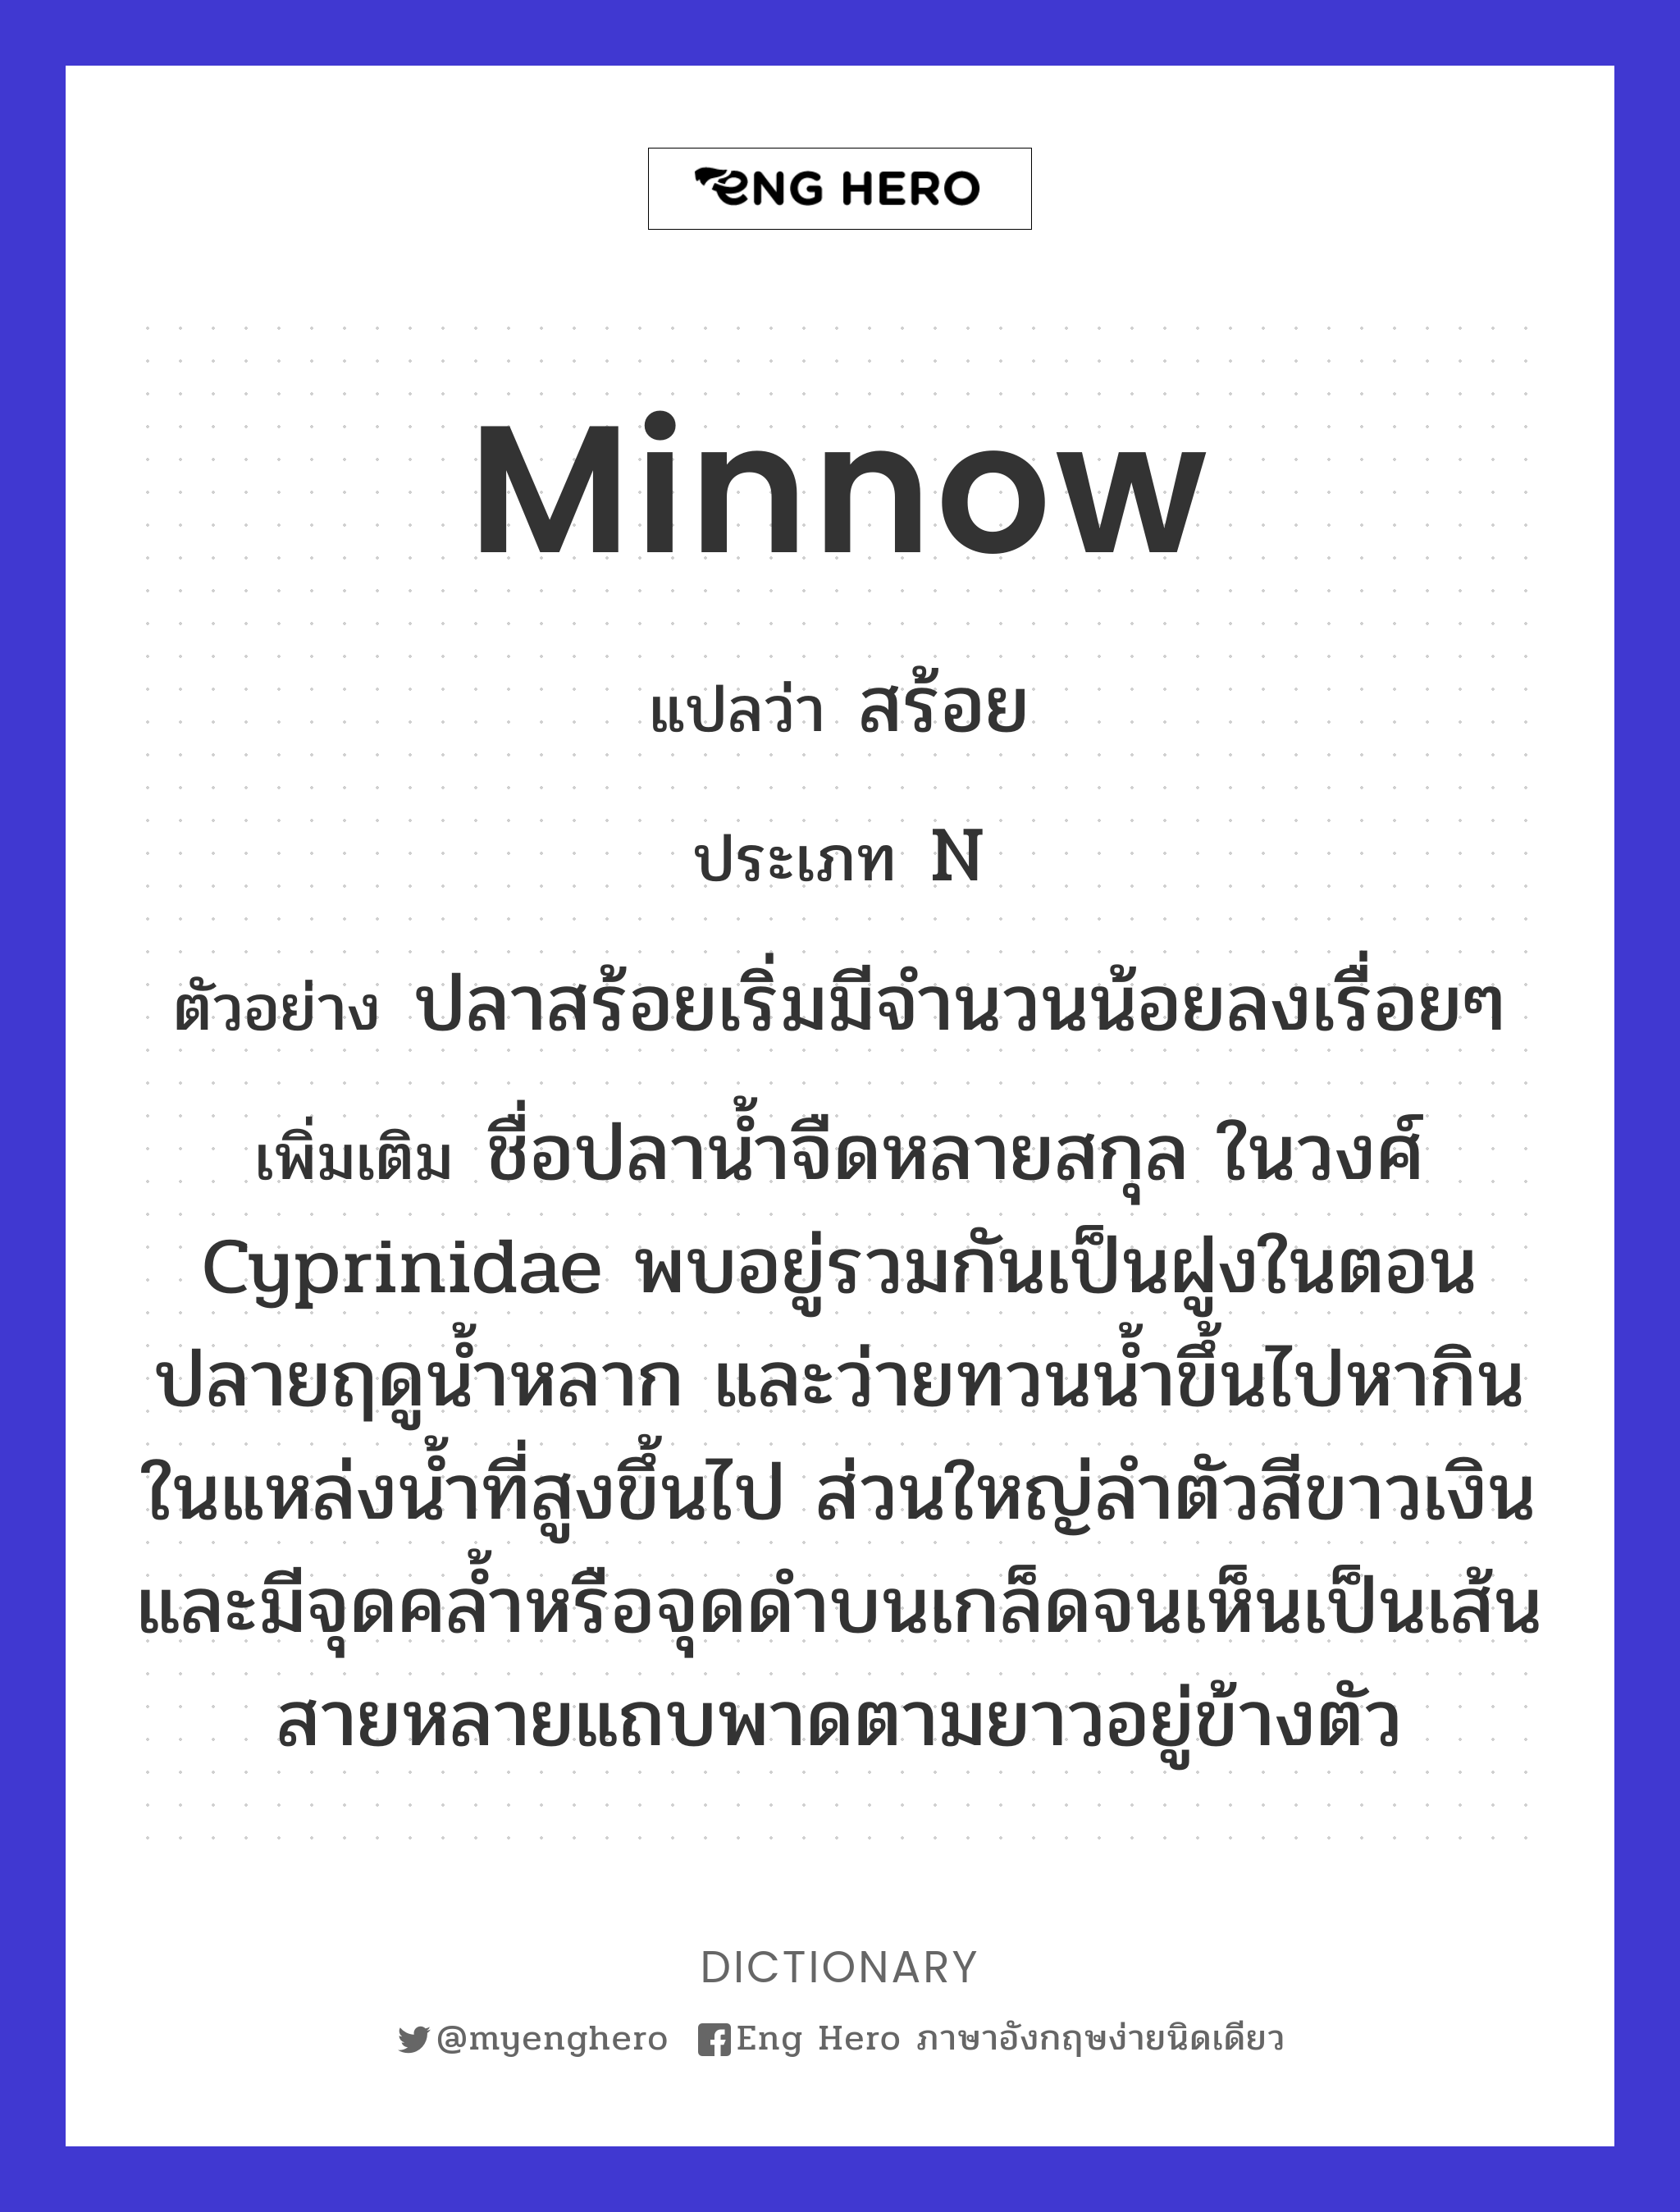 minnow